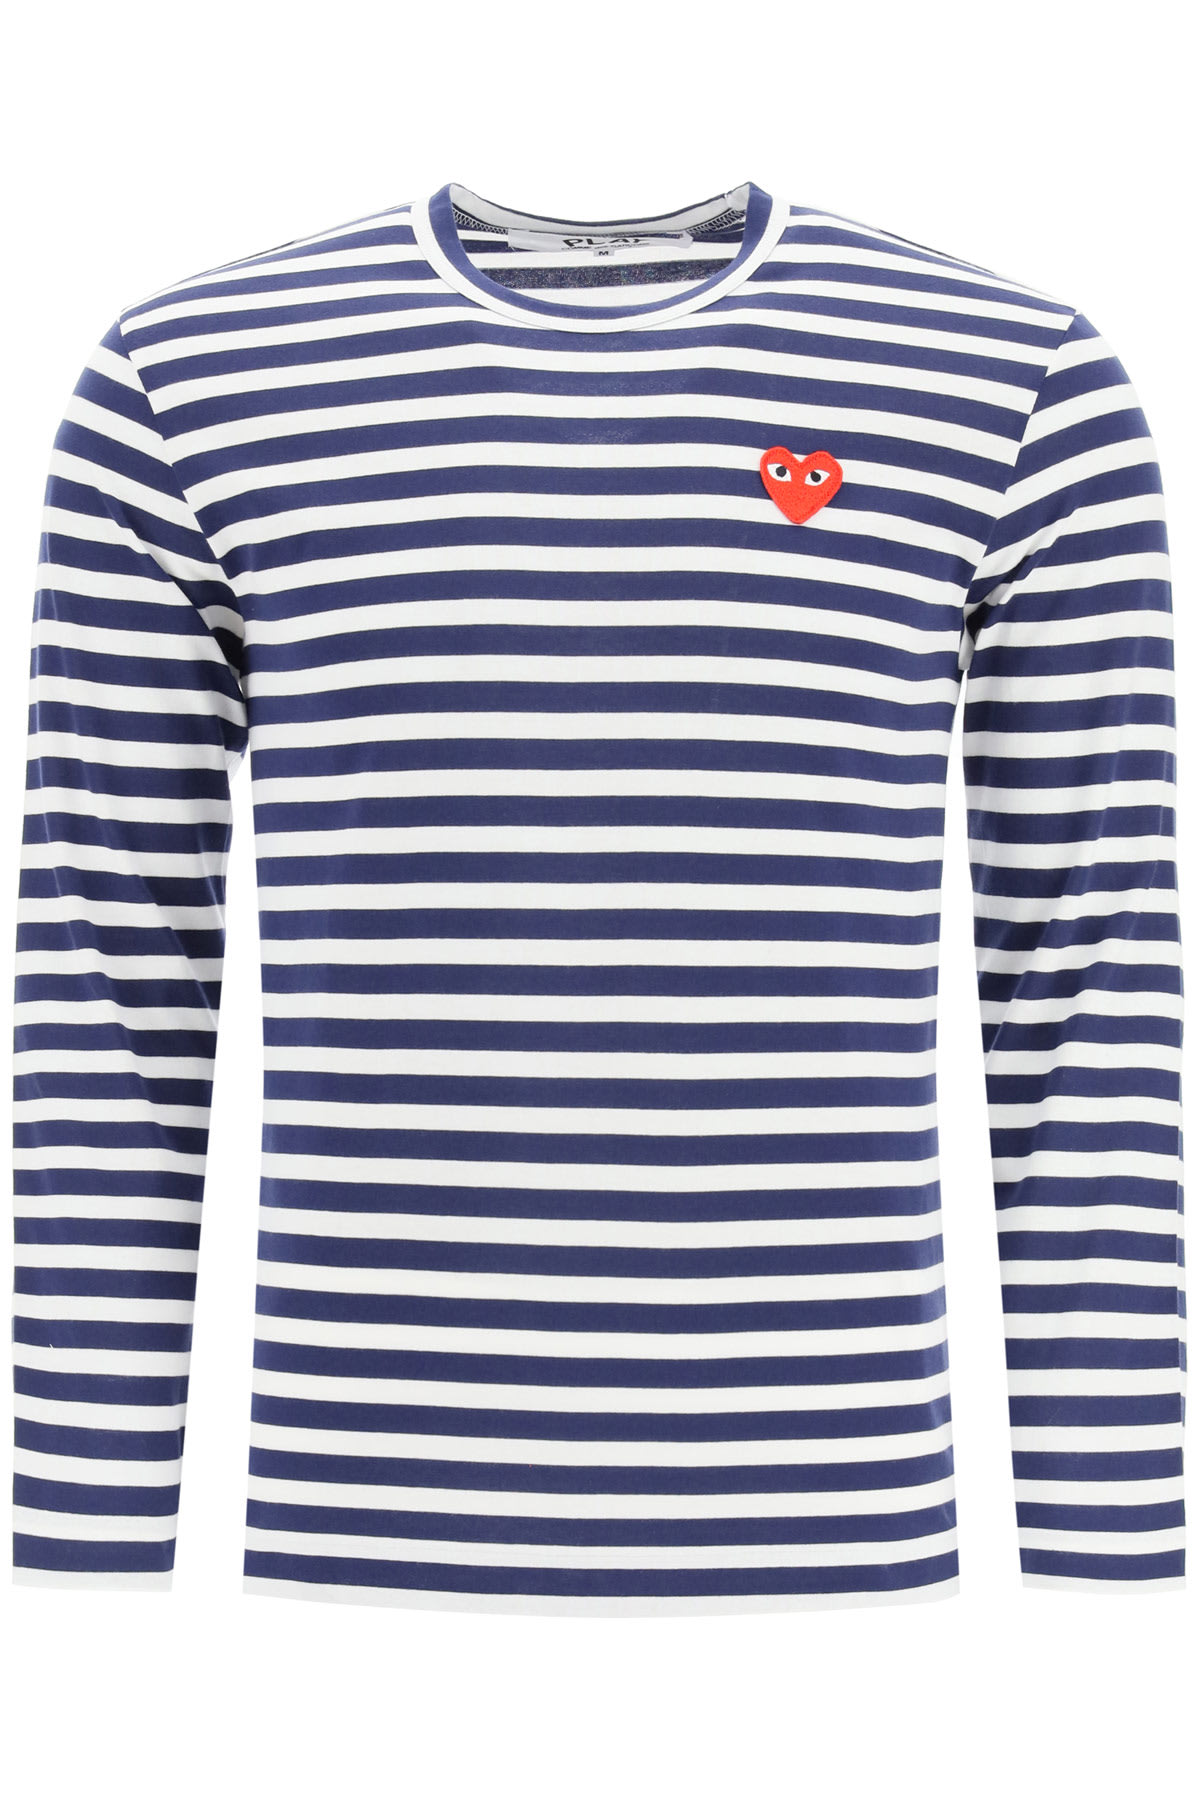 Comme des Garçons Play Striped T-shirt With Heart